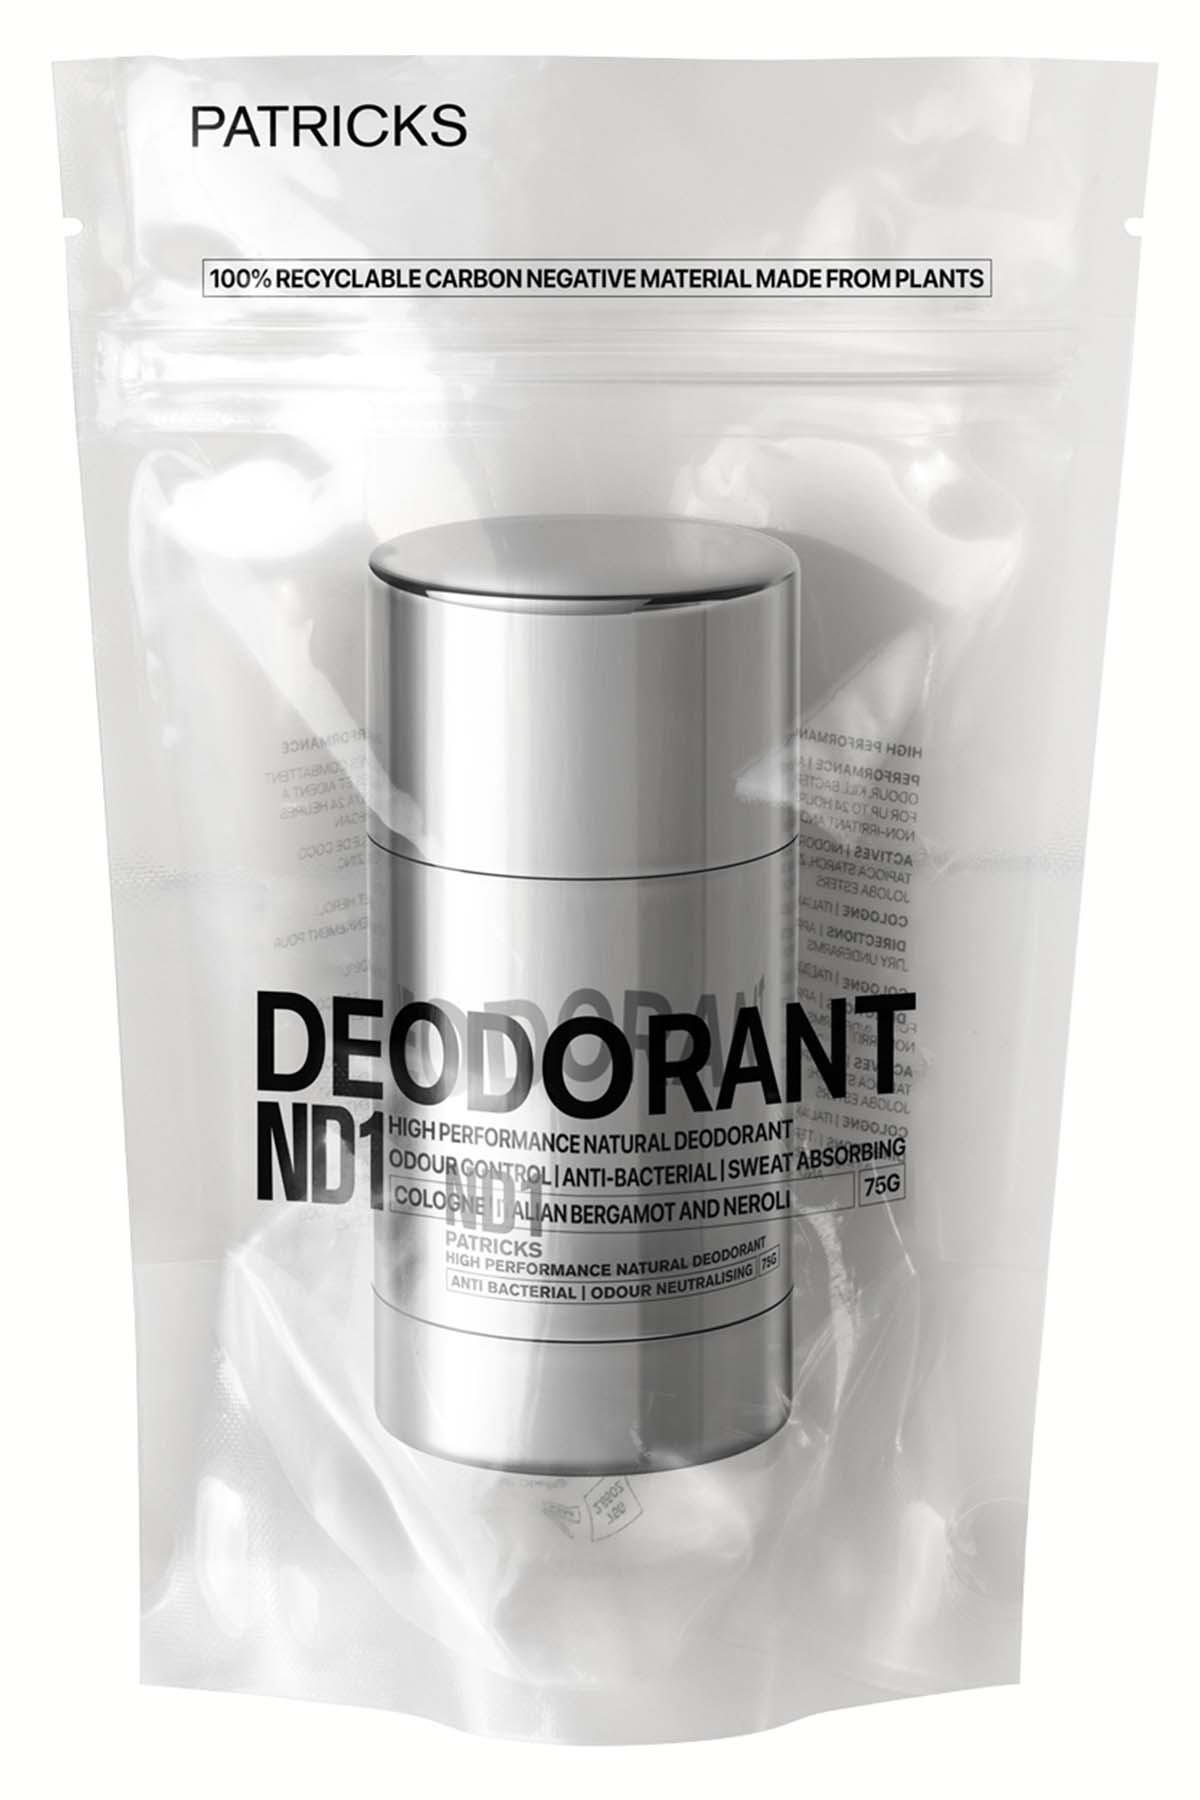 Patricks ND1 High Performance Natural Deodorant 2.65oz